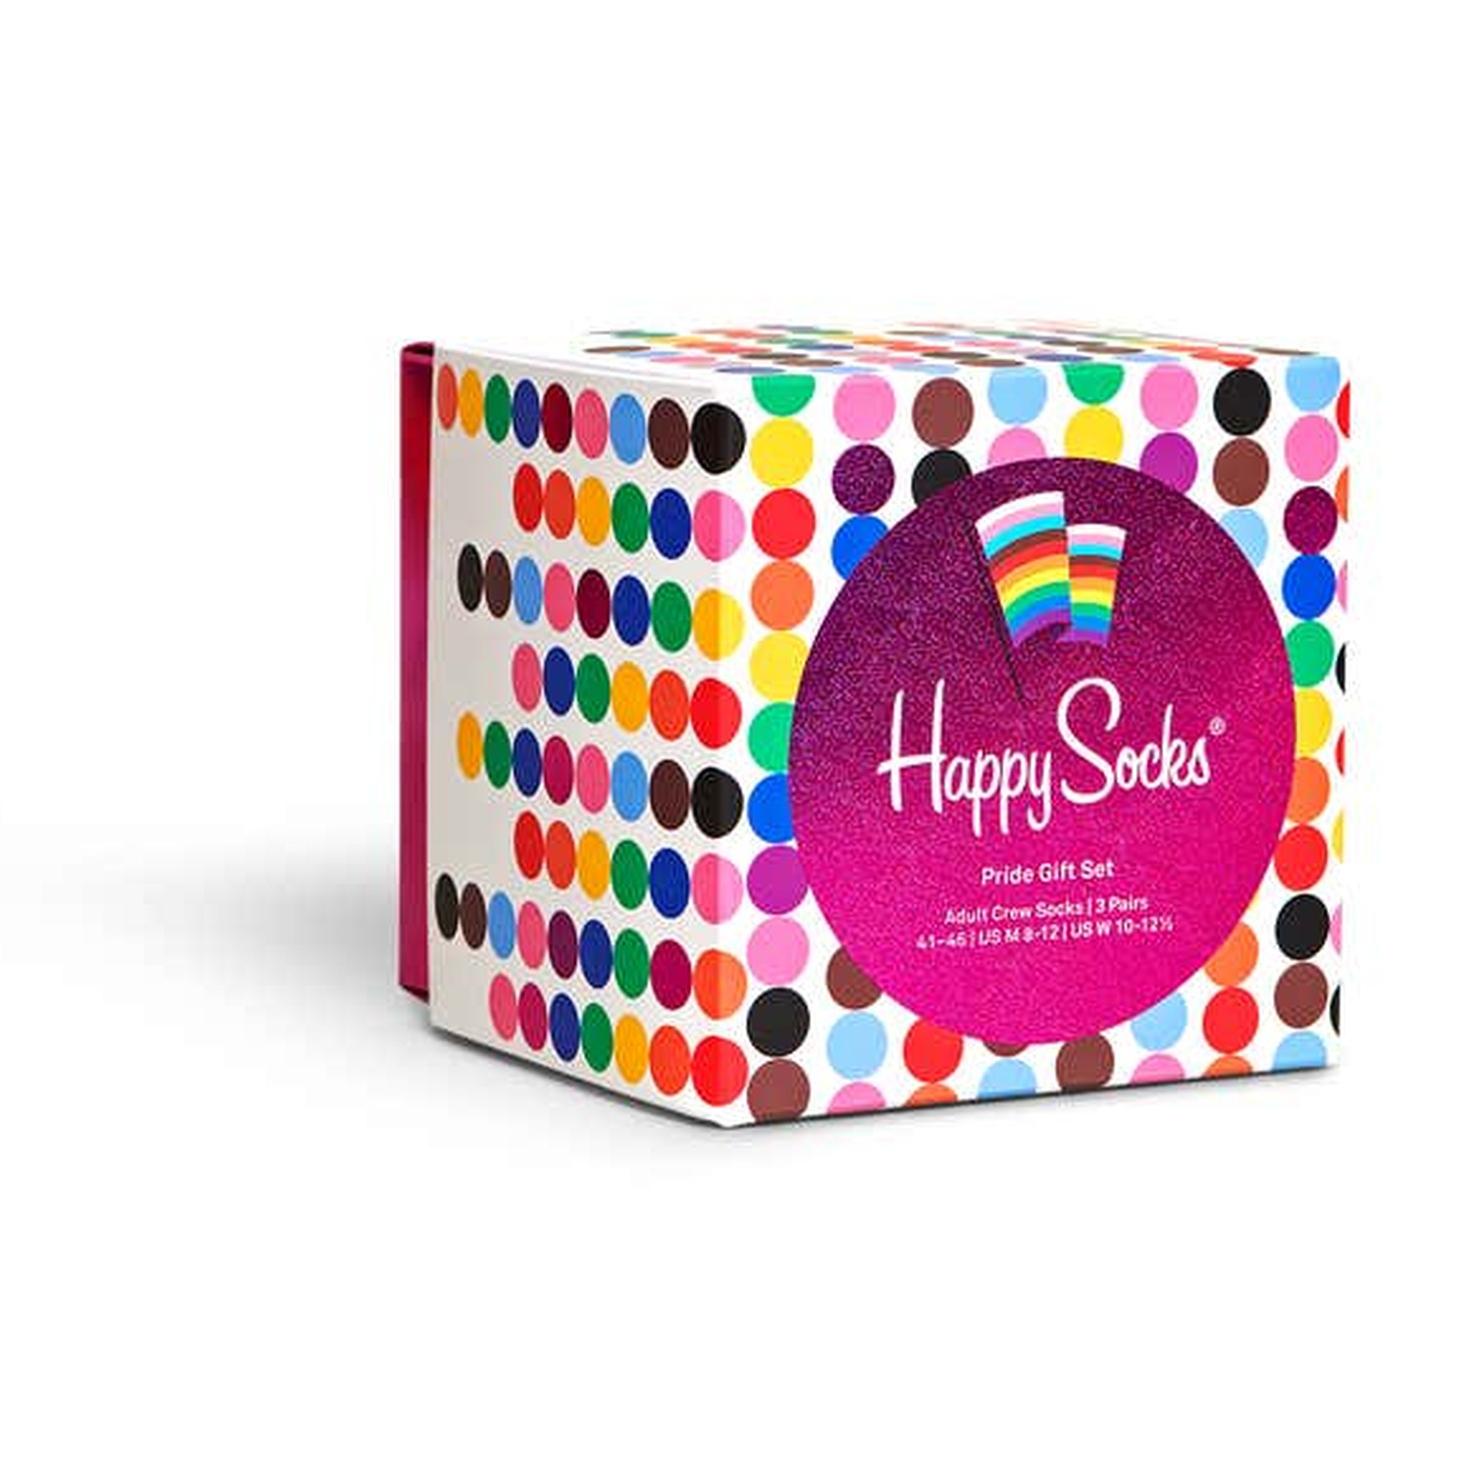 Calcetines 3-pack pride Happysockss gift set